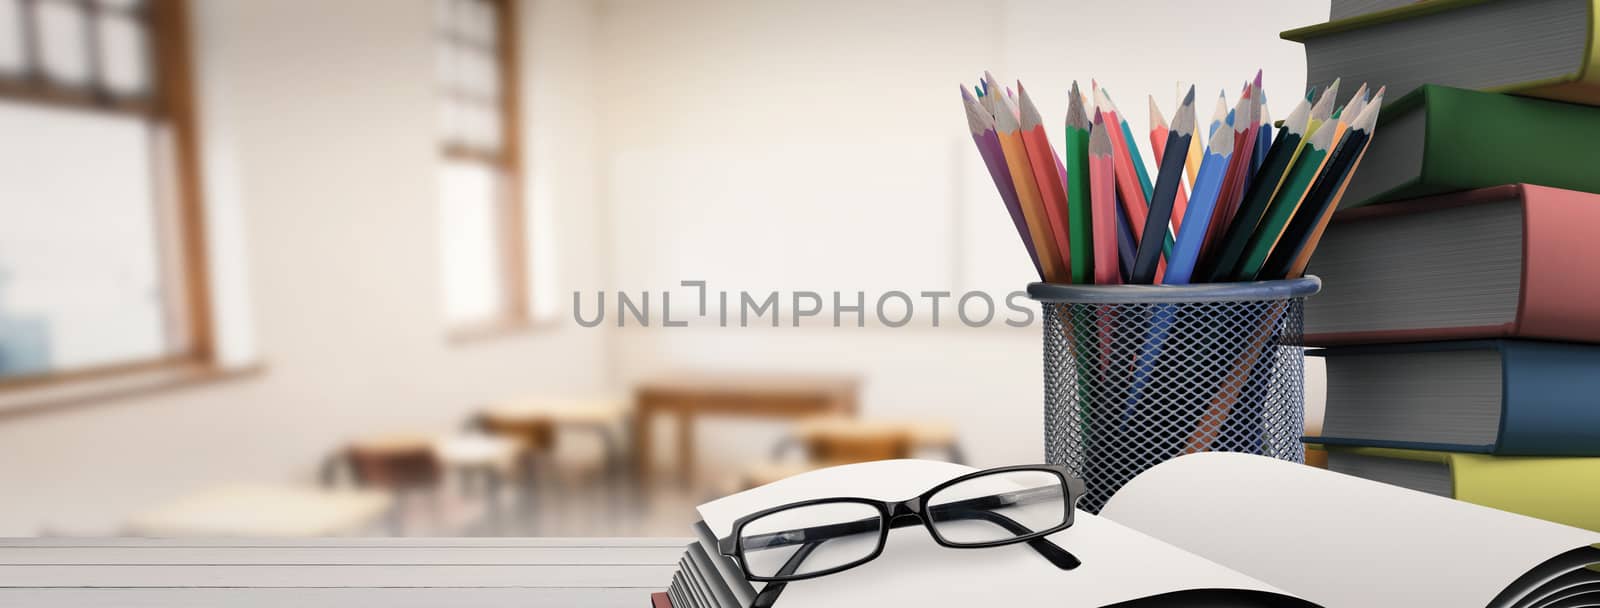 Composite image of school supplies on desk by Wavebreakmedia